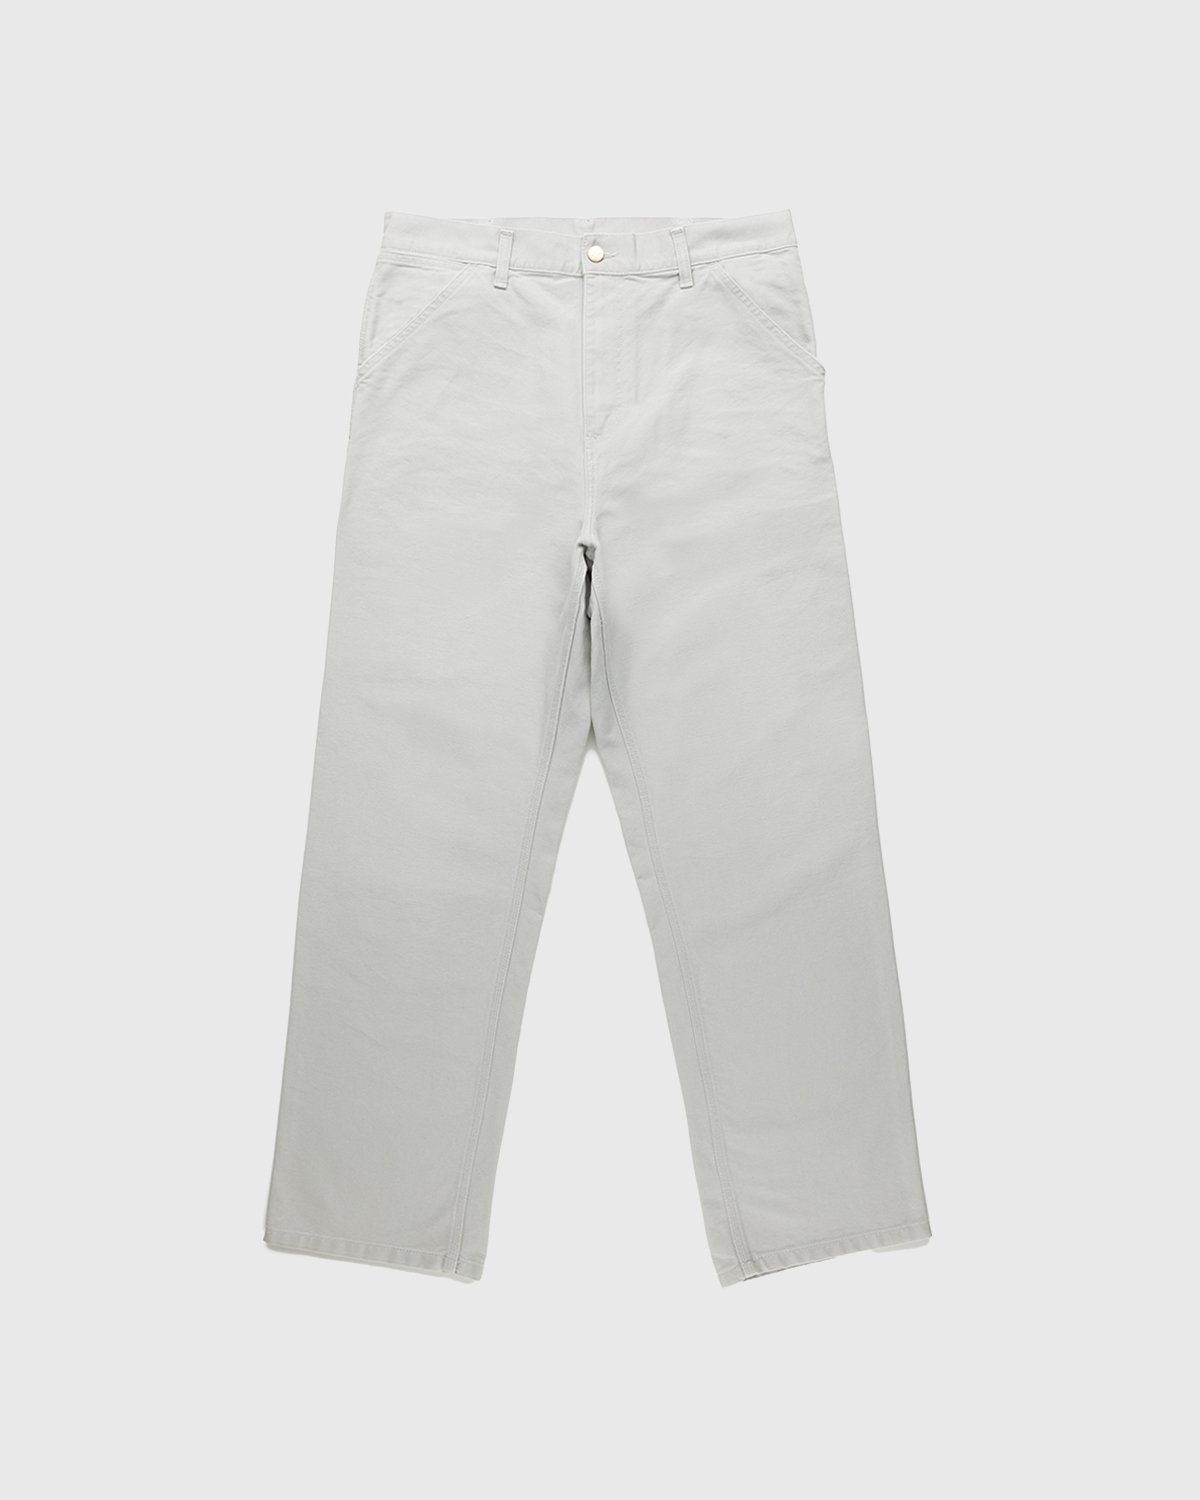 Carhartt WIP – Single Knee Pant Aged Canvas Grey - Pants - Grey - Image 1